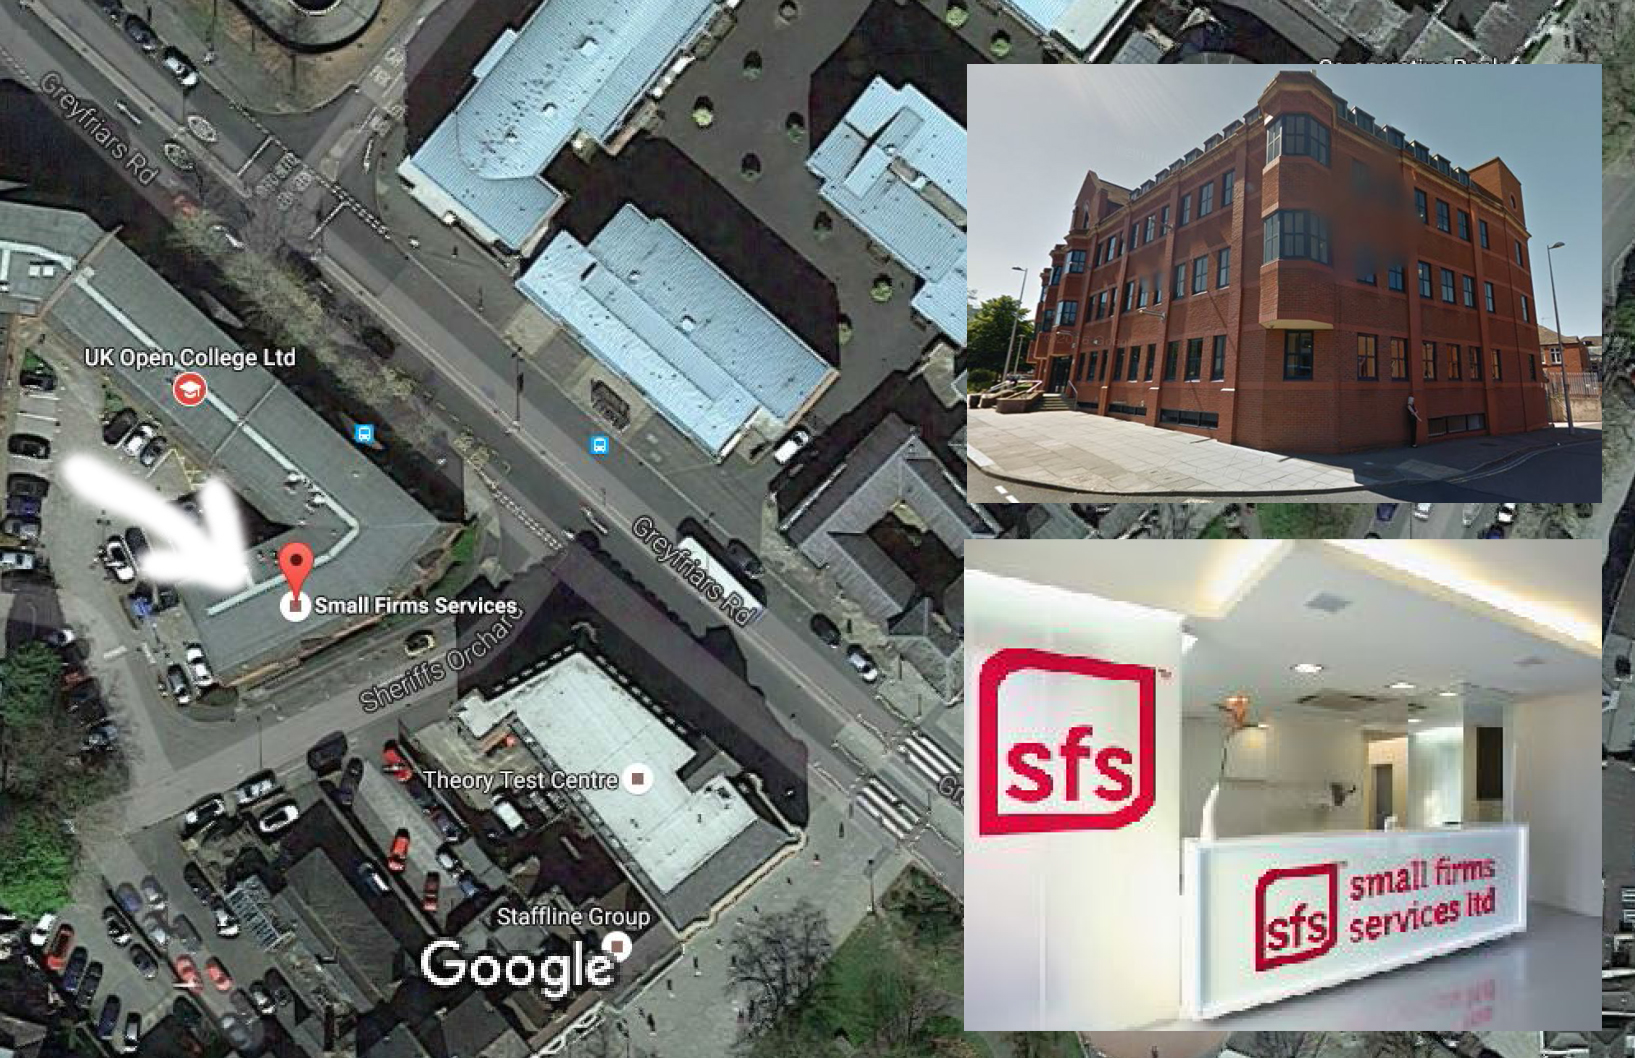 Small Firms Services - Google Maps alto-1 copia.jpg